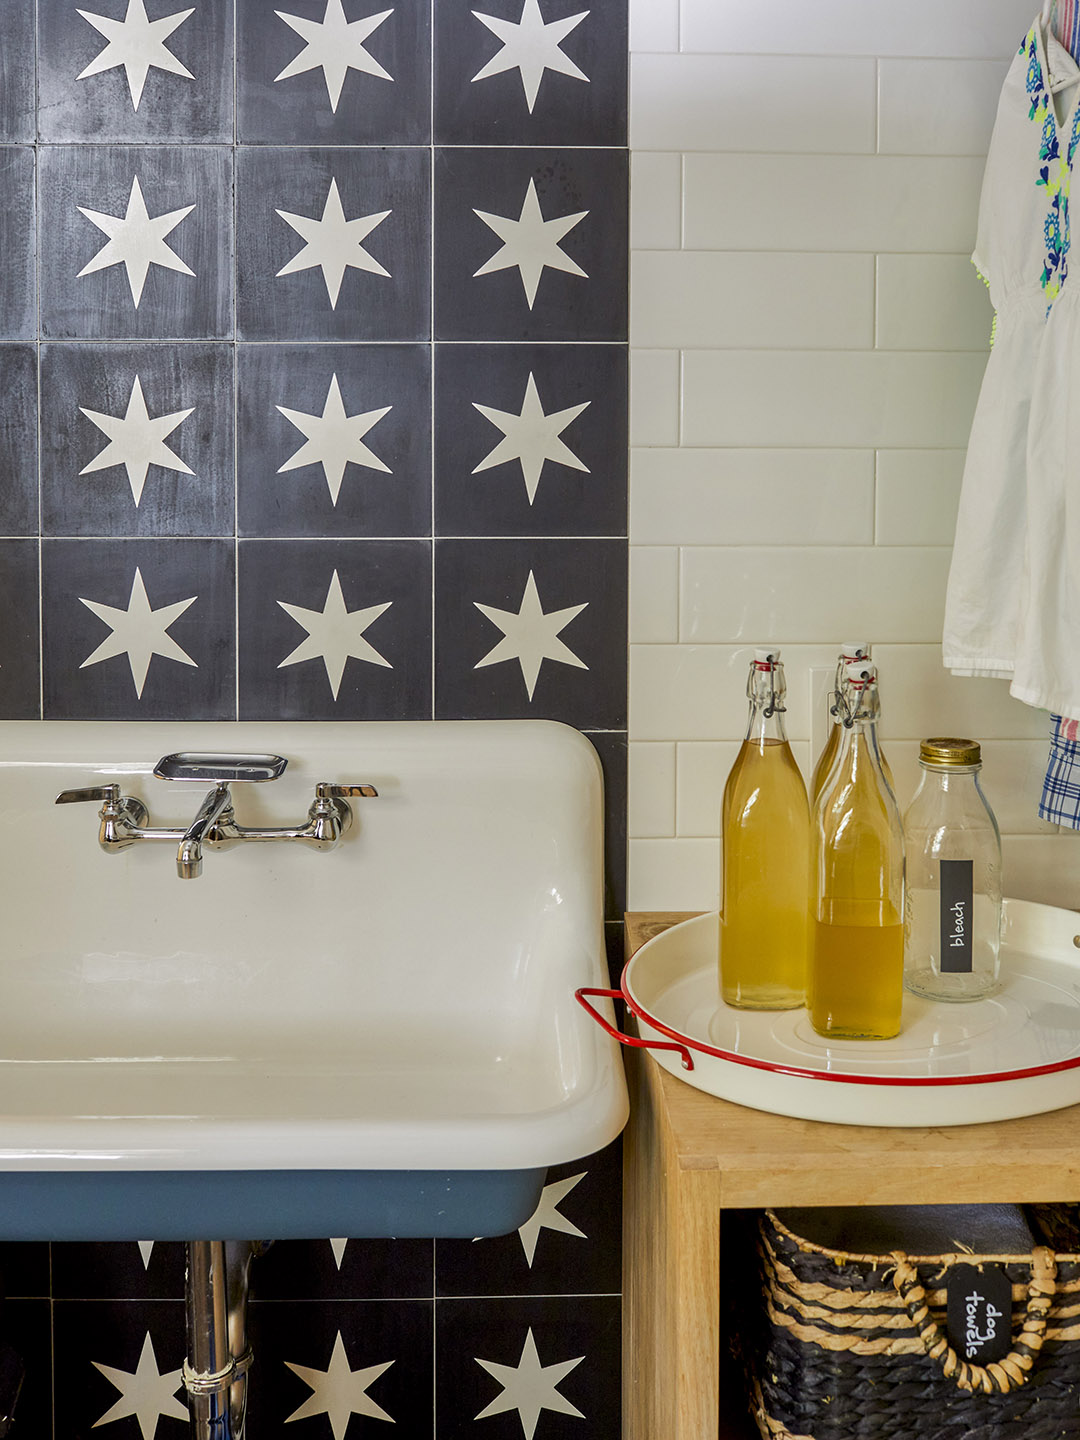 star tile behind laundry room sink